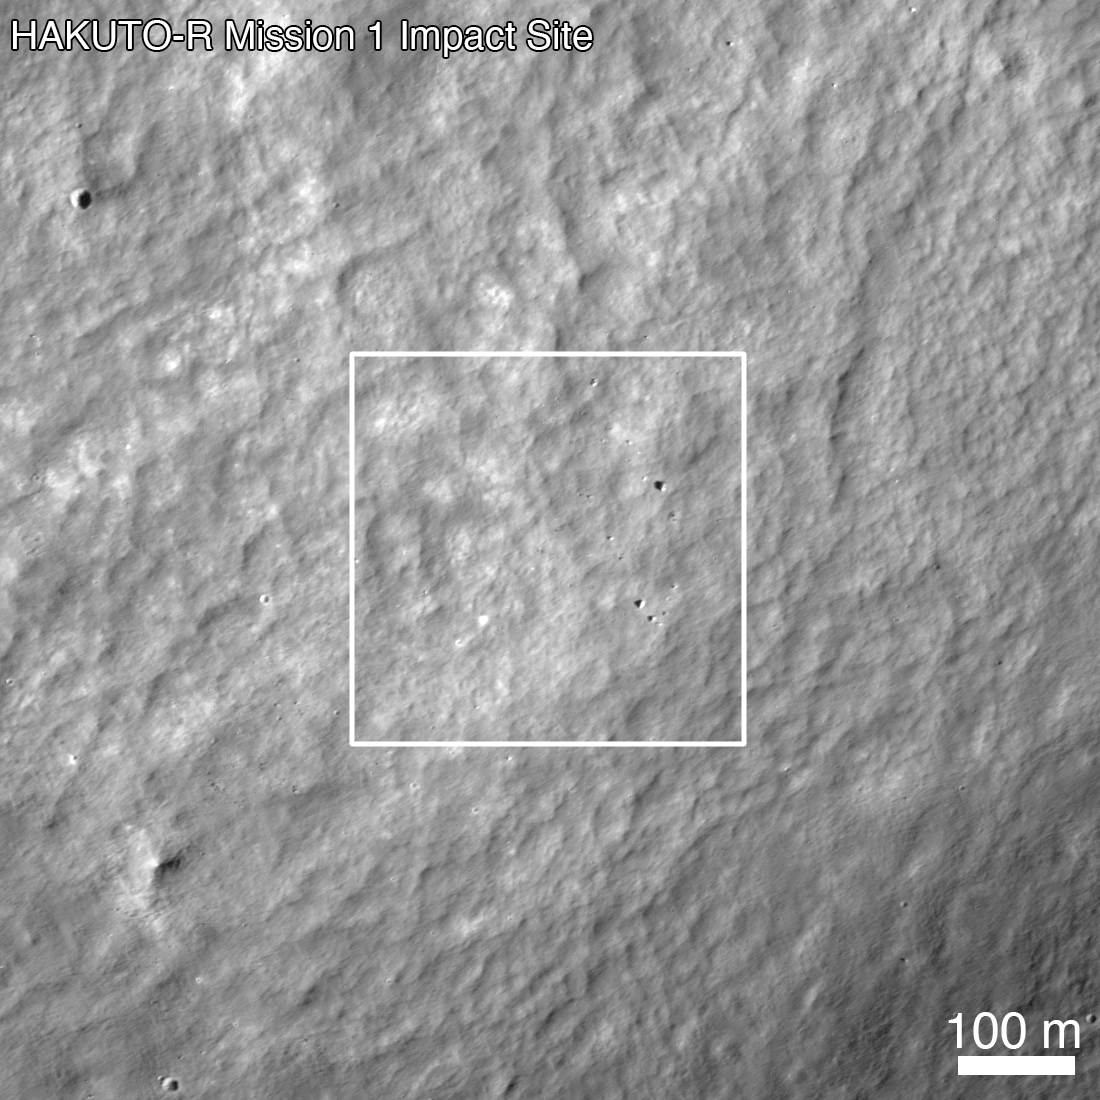 Impact Site of the HAKUTO-R Mission 1 Lunar Lander 